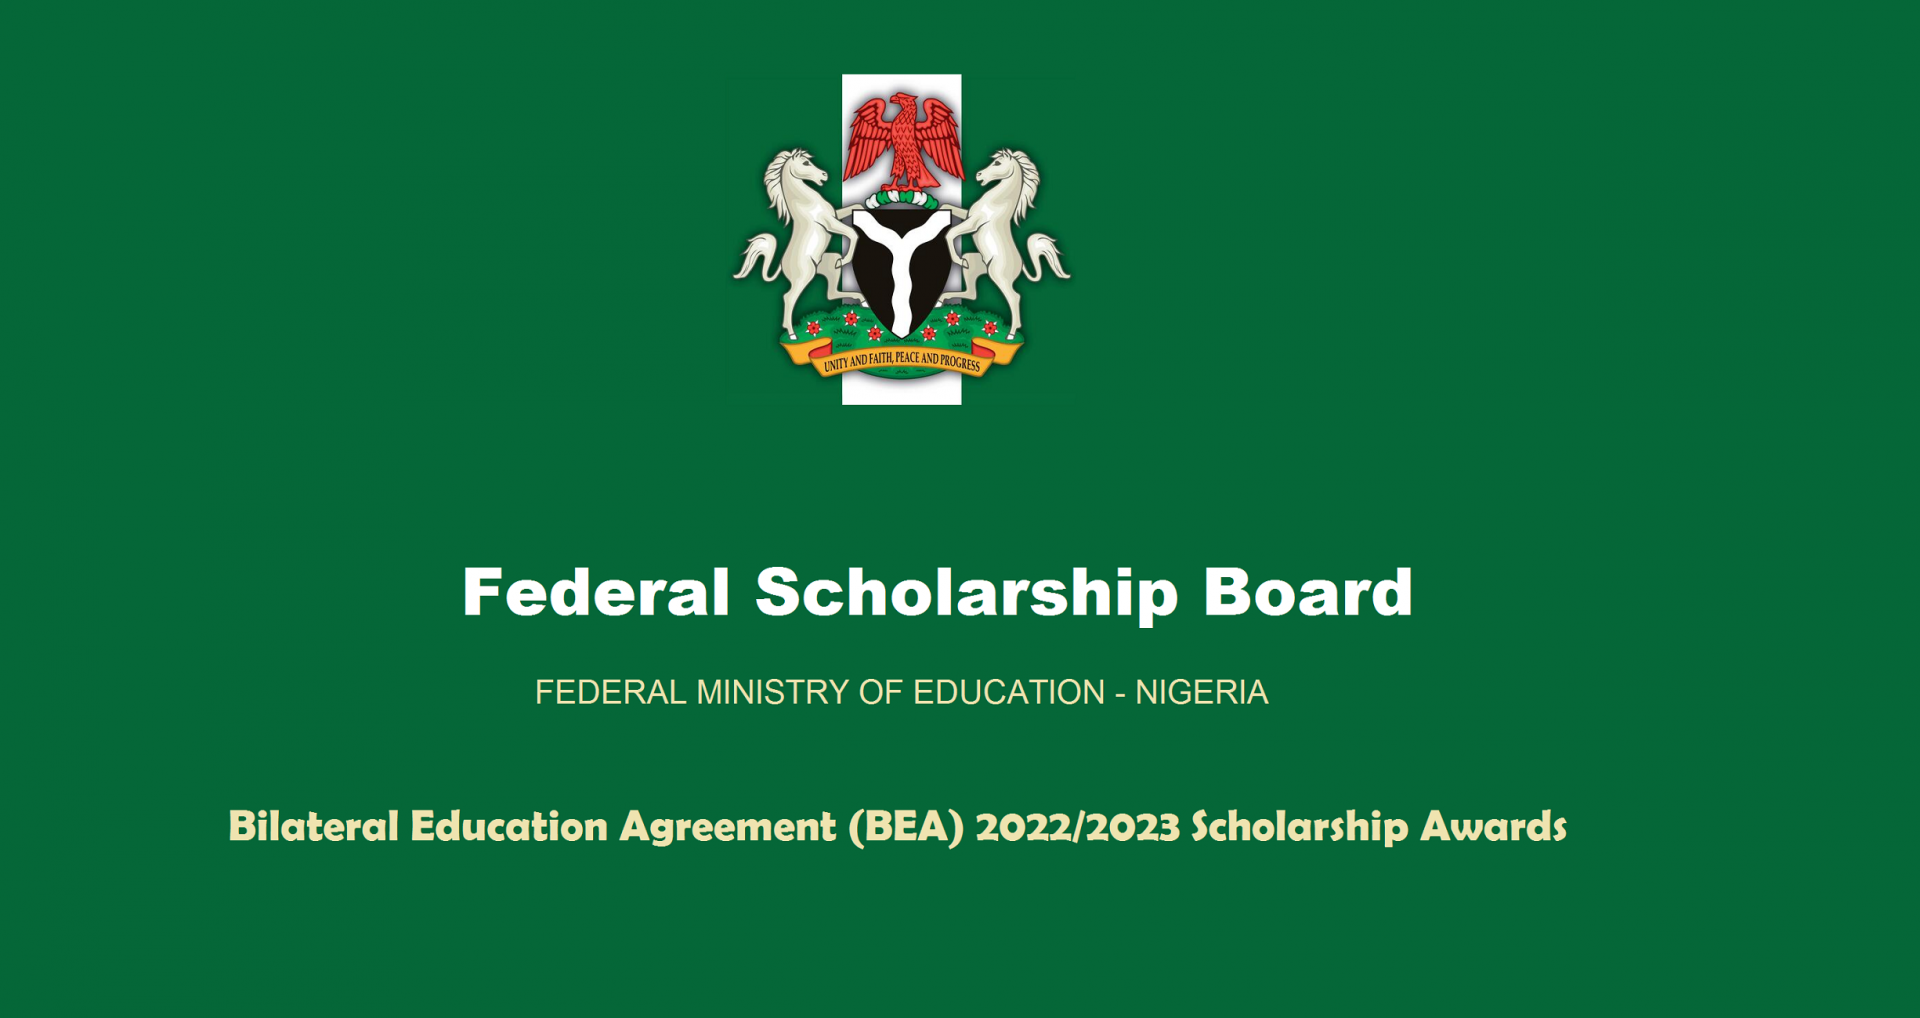 Federal Government Scholarship Awards, Bilateral Education Agreement (BEA) Scholarship Awards